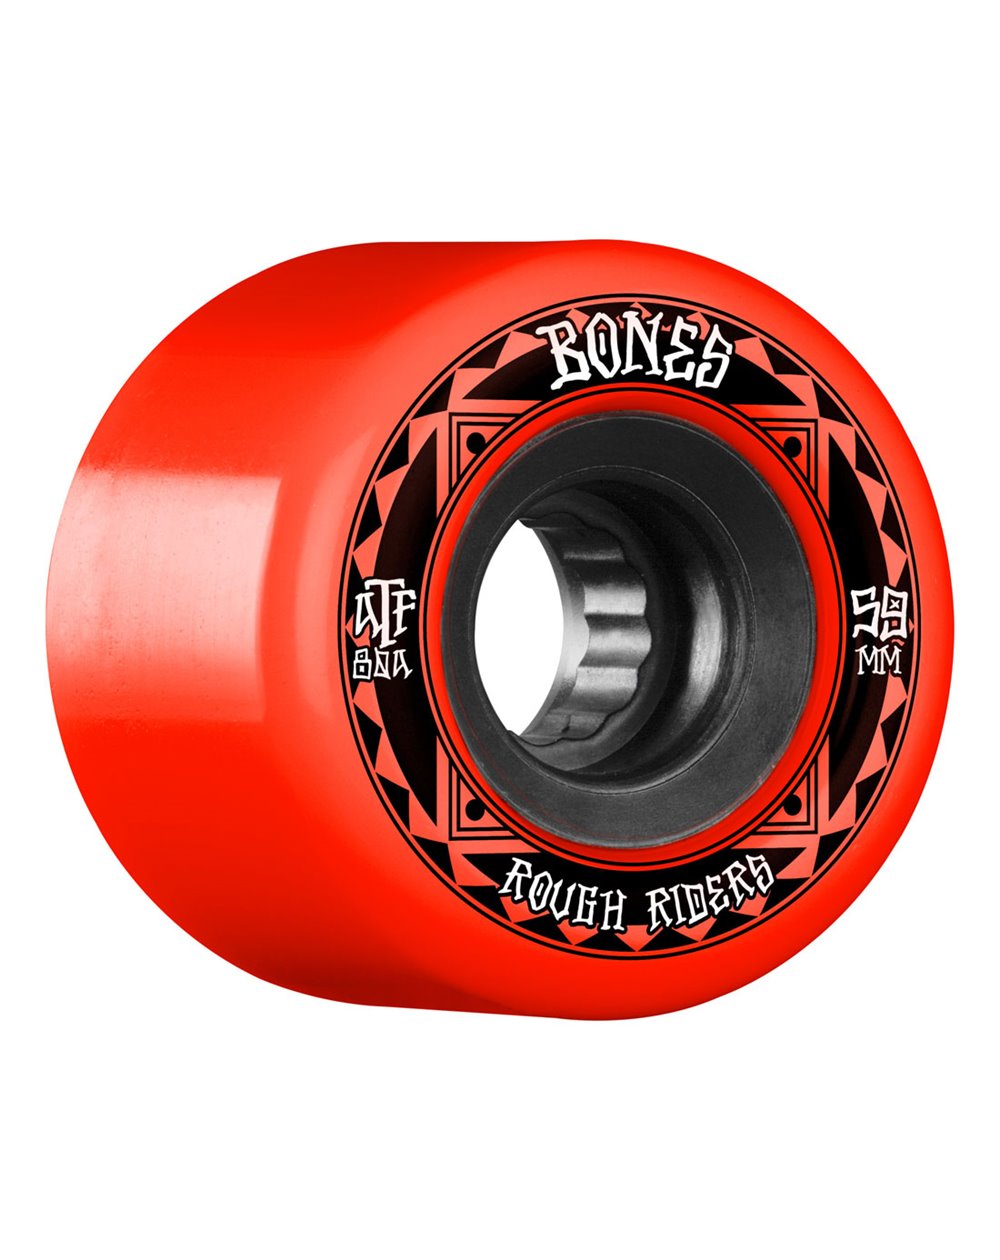 Bones Wheels ATF Rough Rider Runners 59mm 80A Skateboard Wheels Red pack of 4